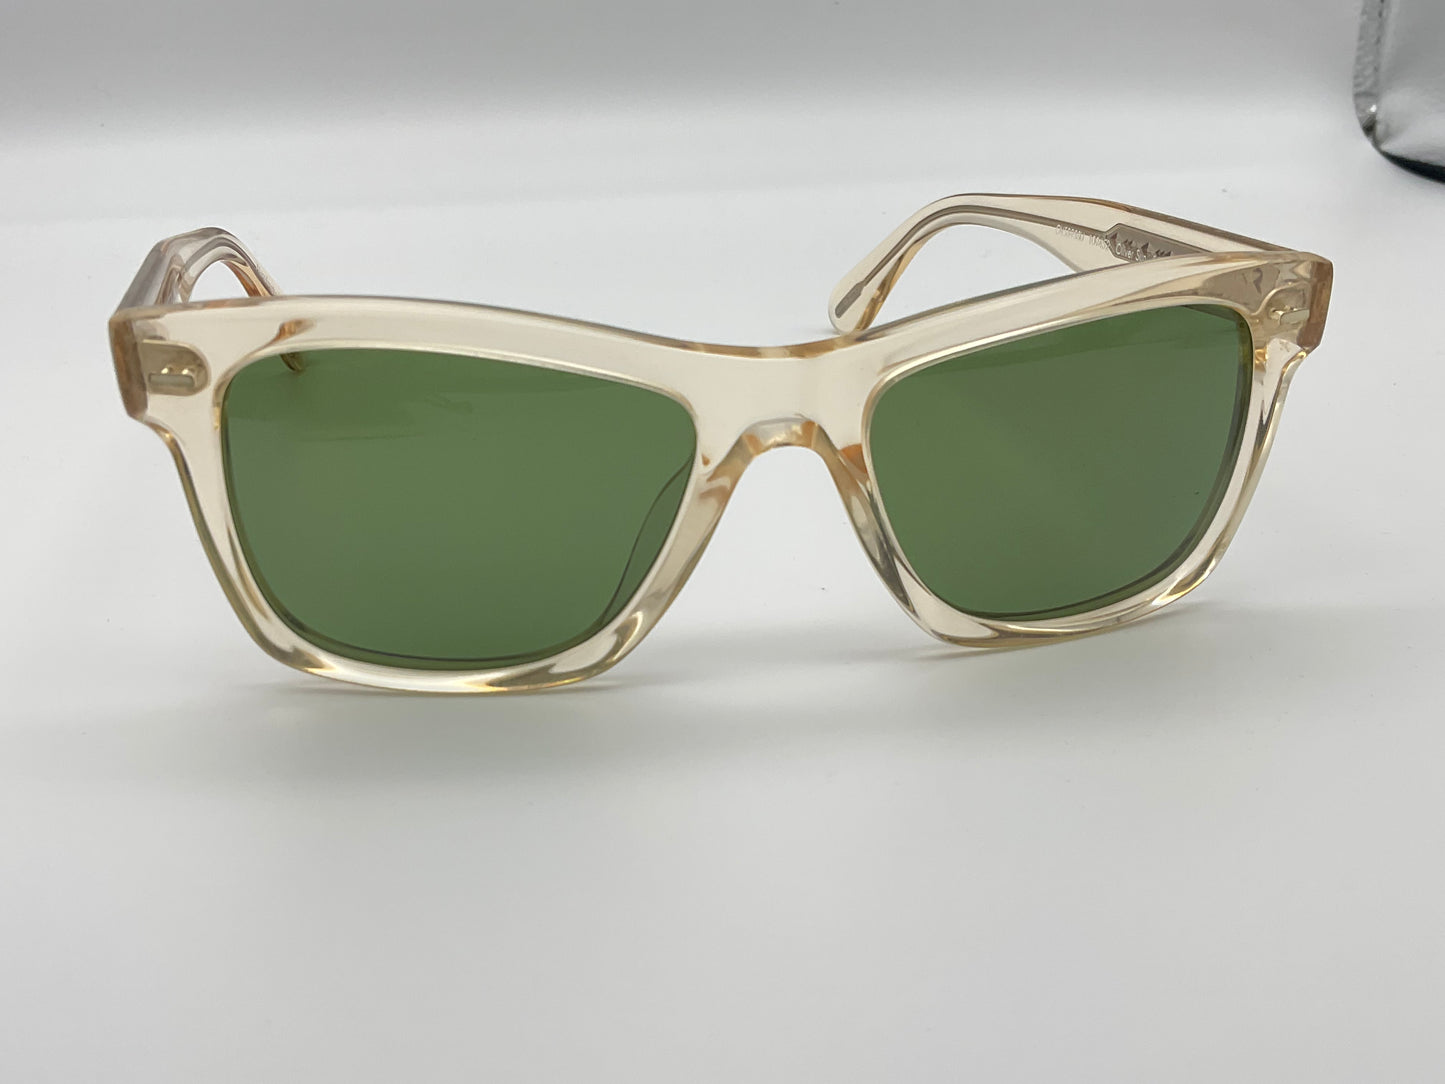 Oliver Peoples Oliver Sun 54mm Buff Green Glass lenses